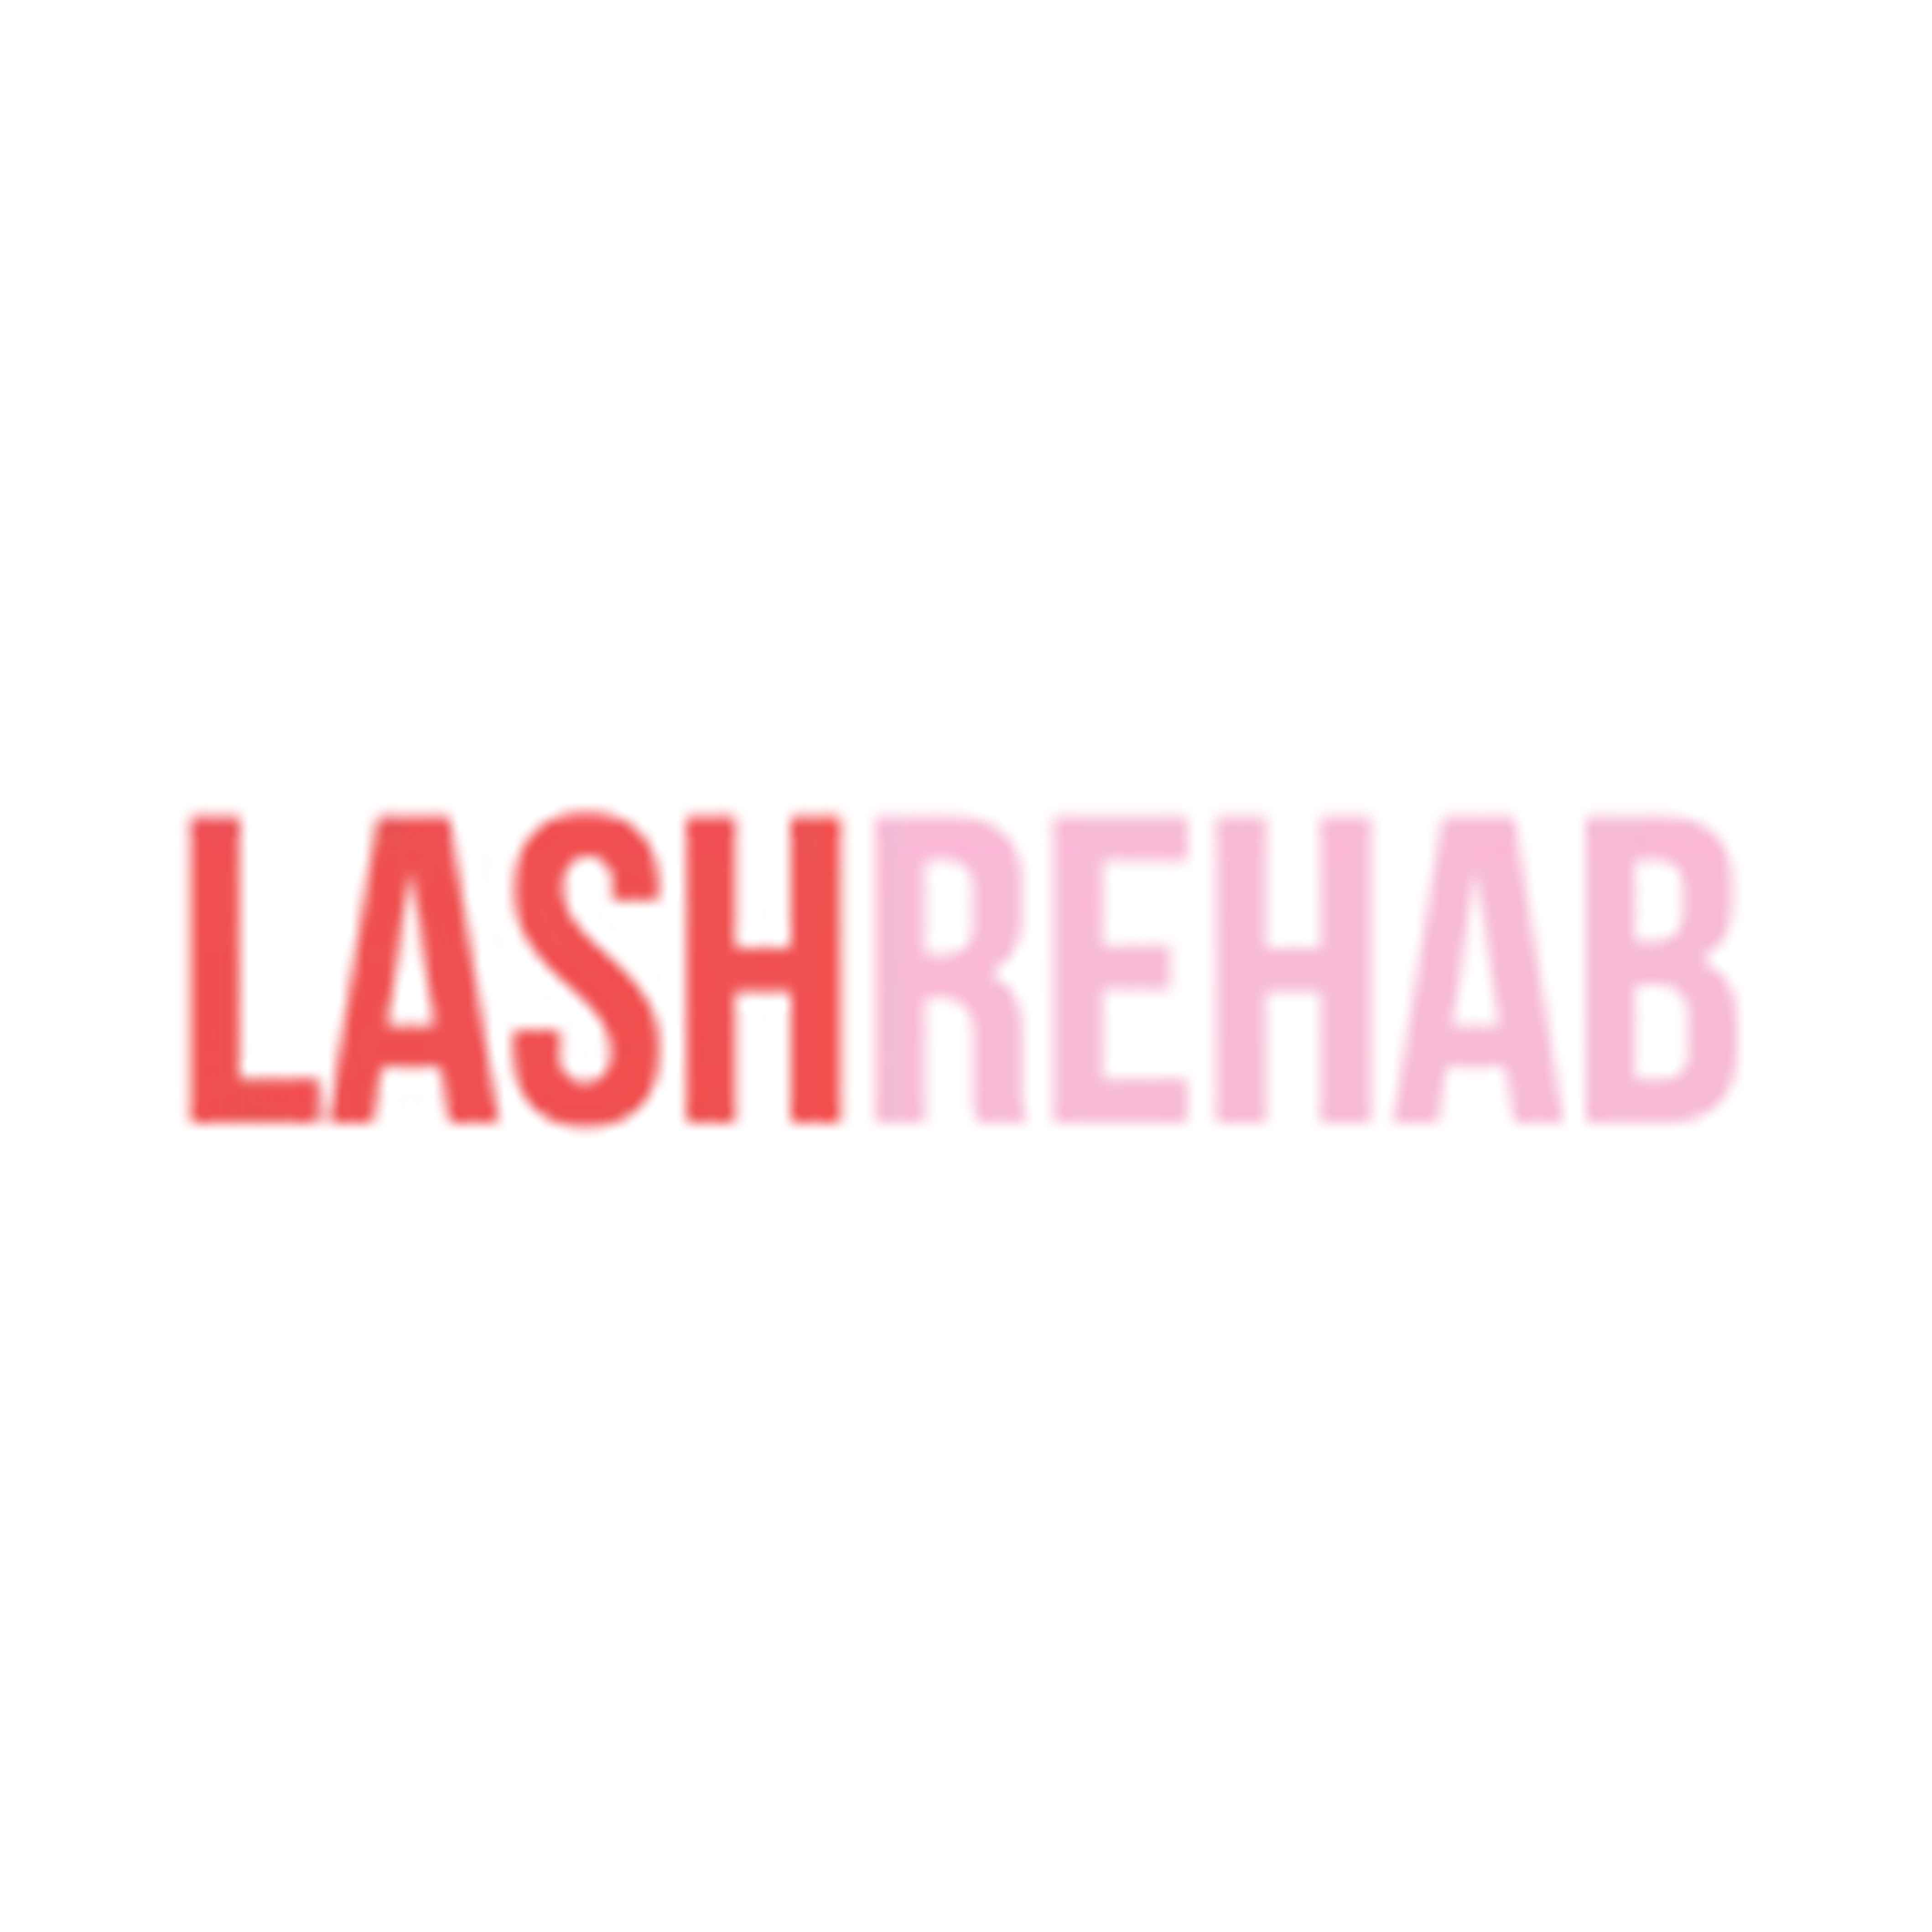 The Lash Rehab discount codes